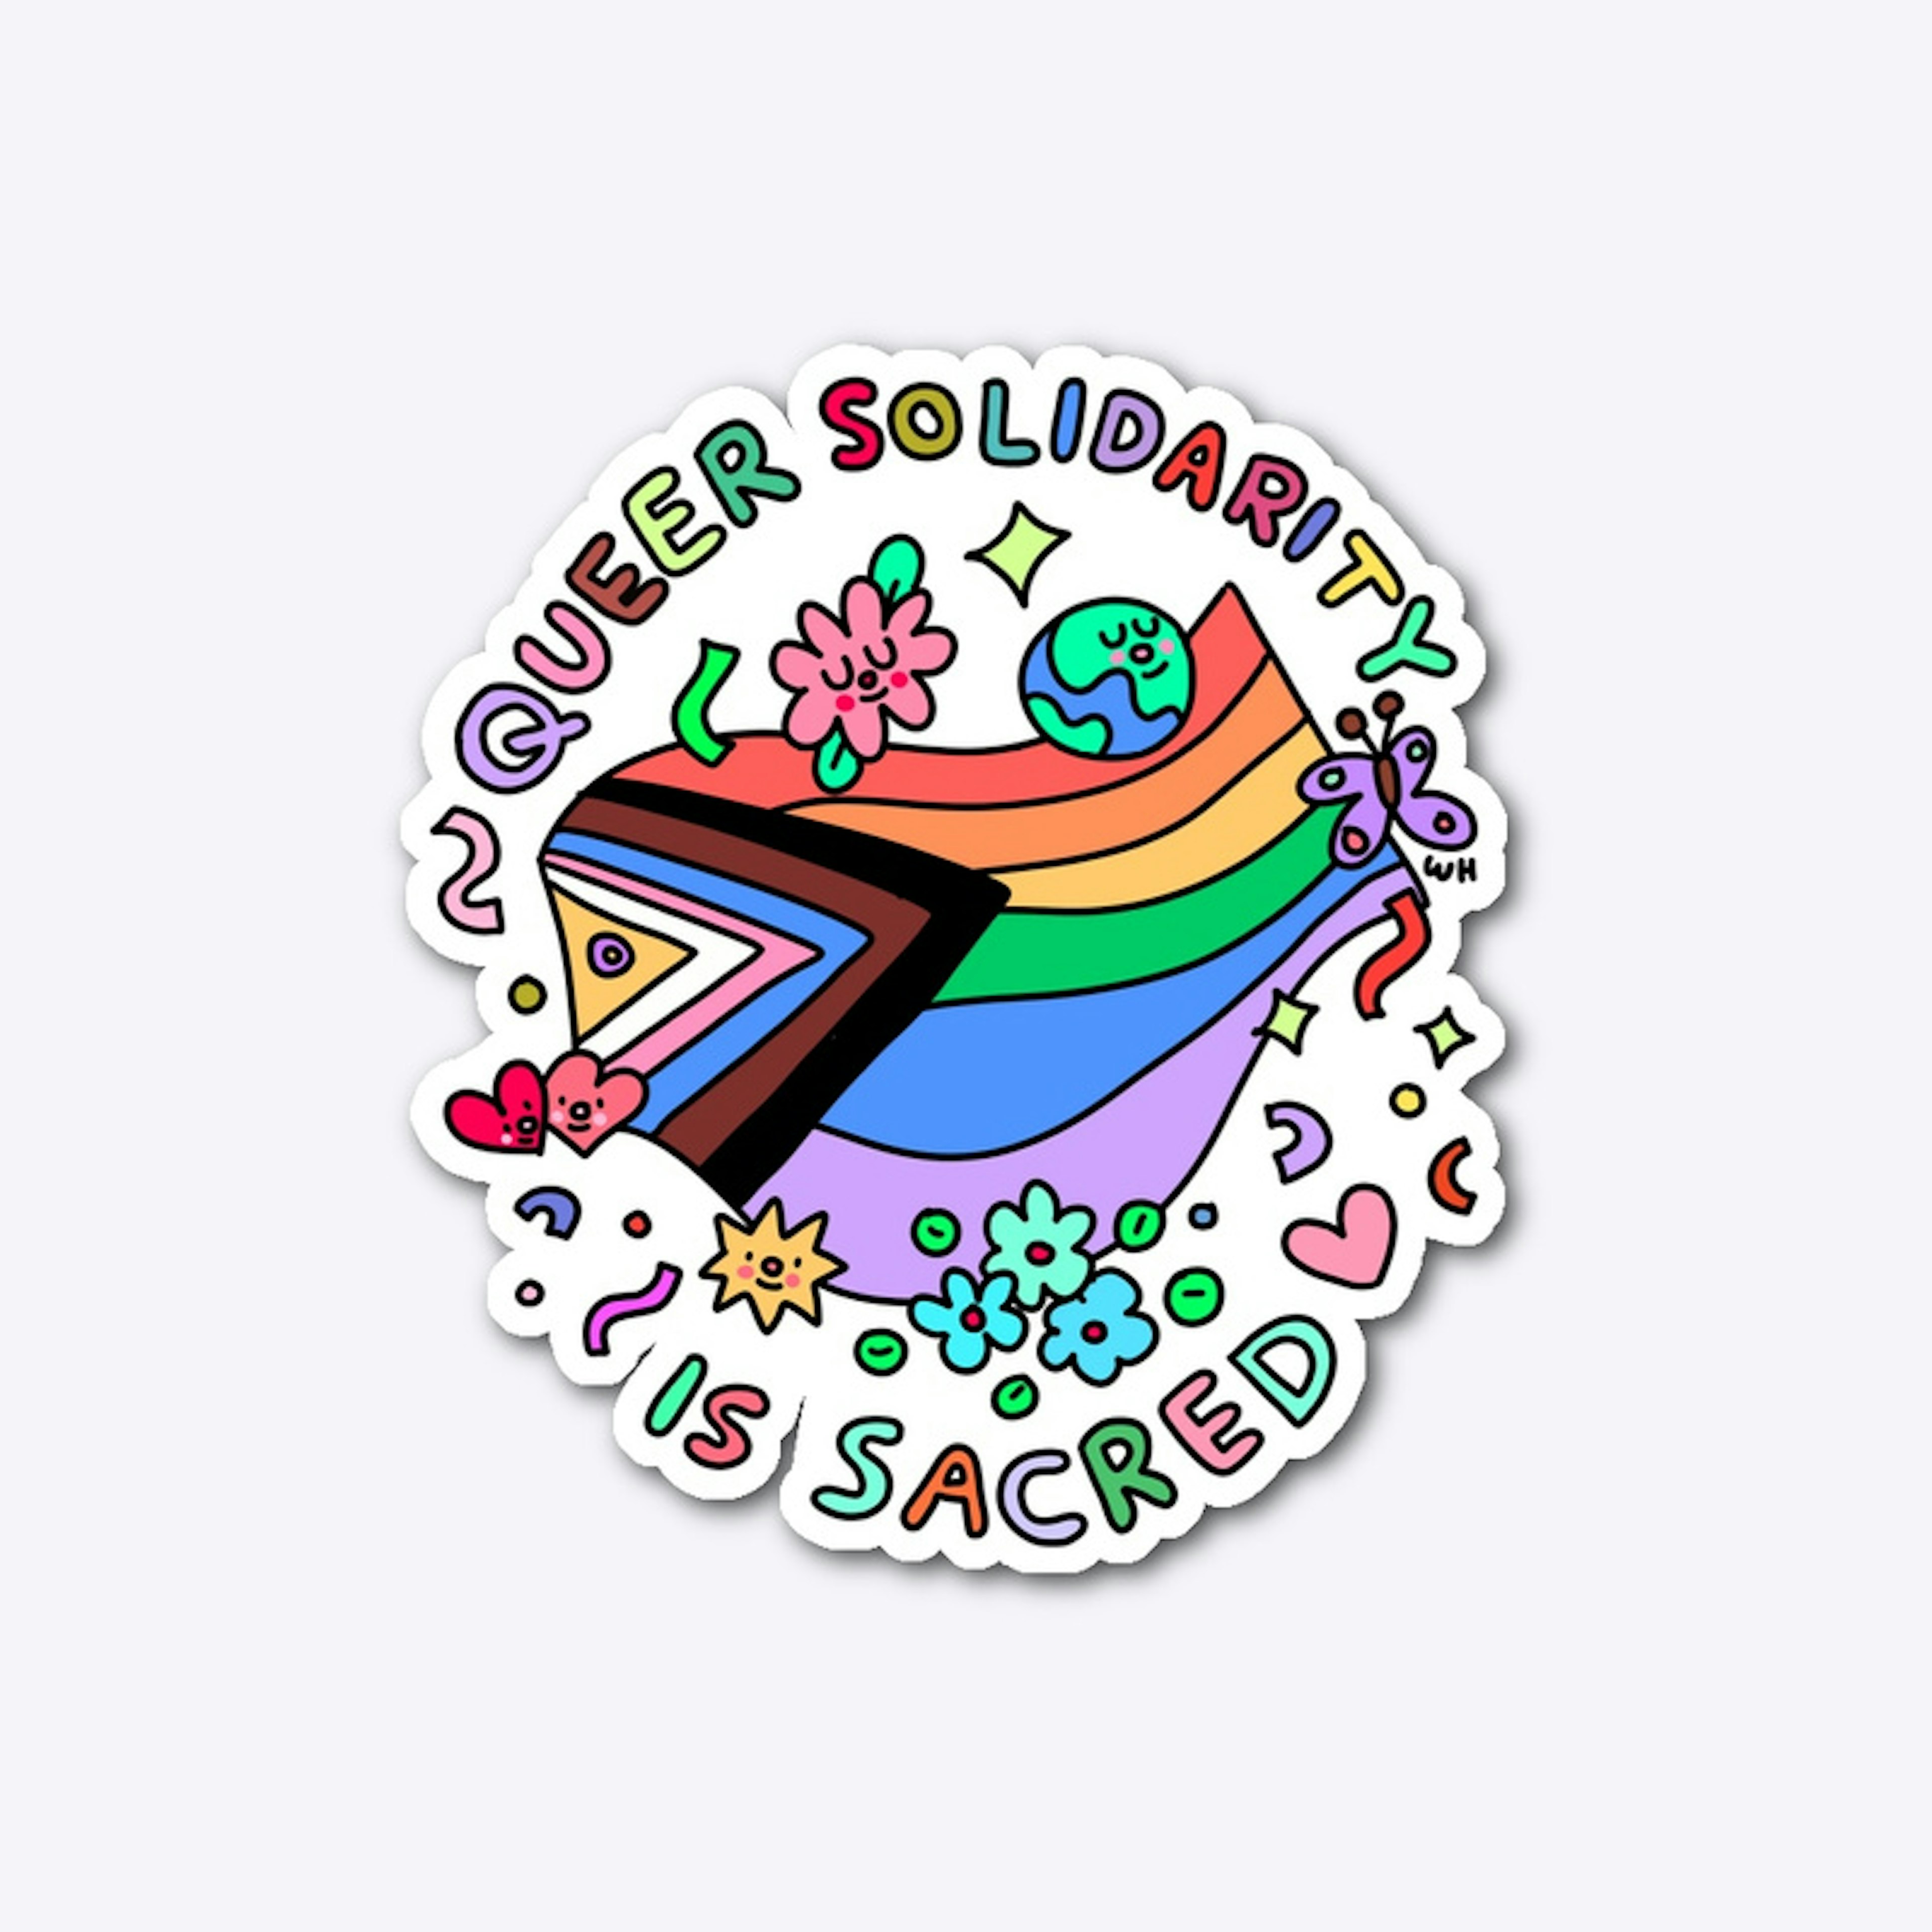 Queer Solidarity is Sacred